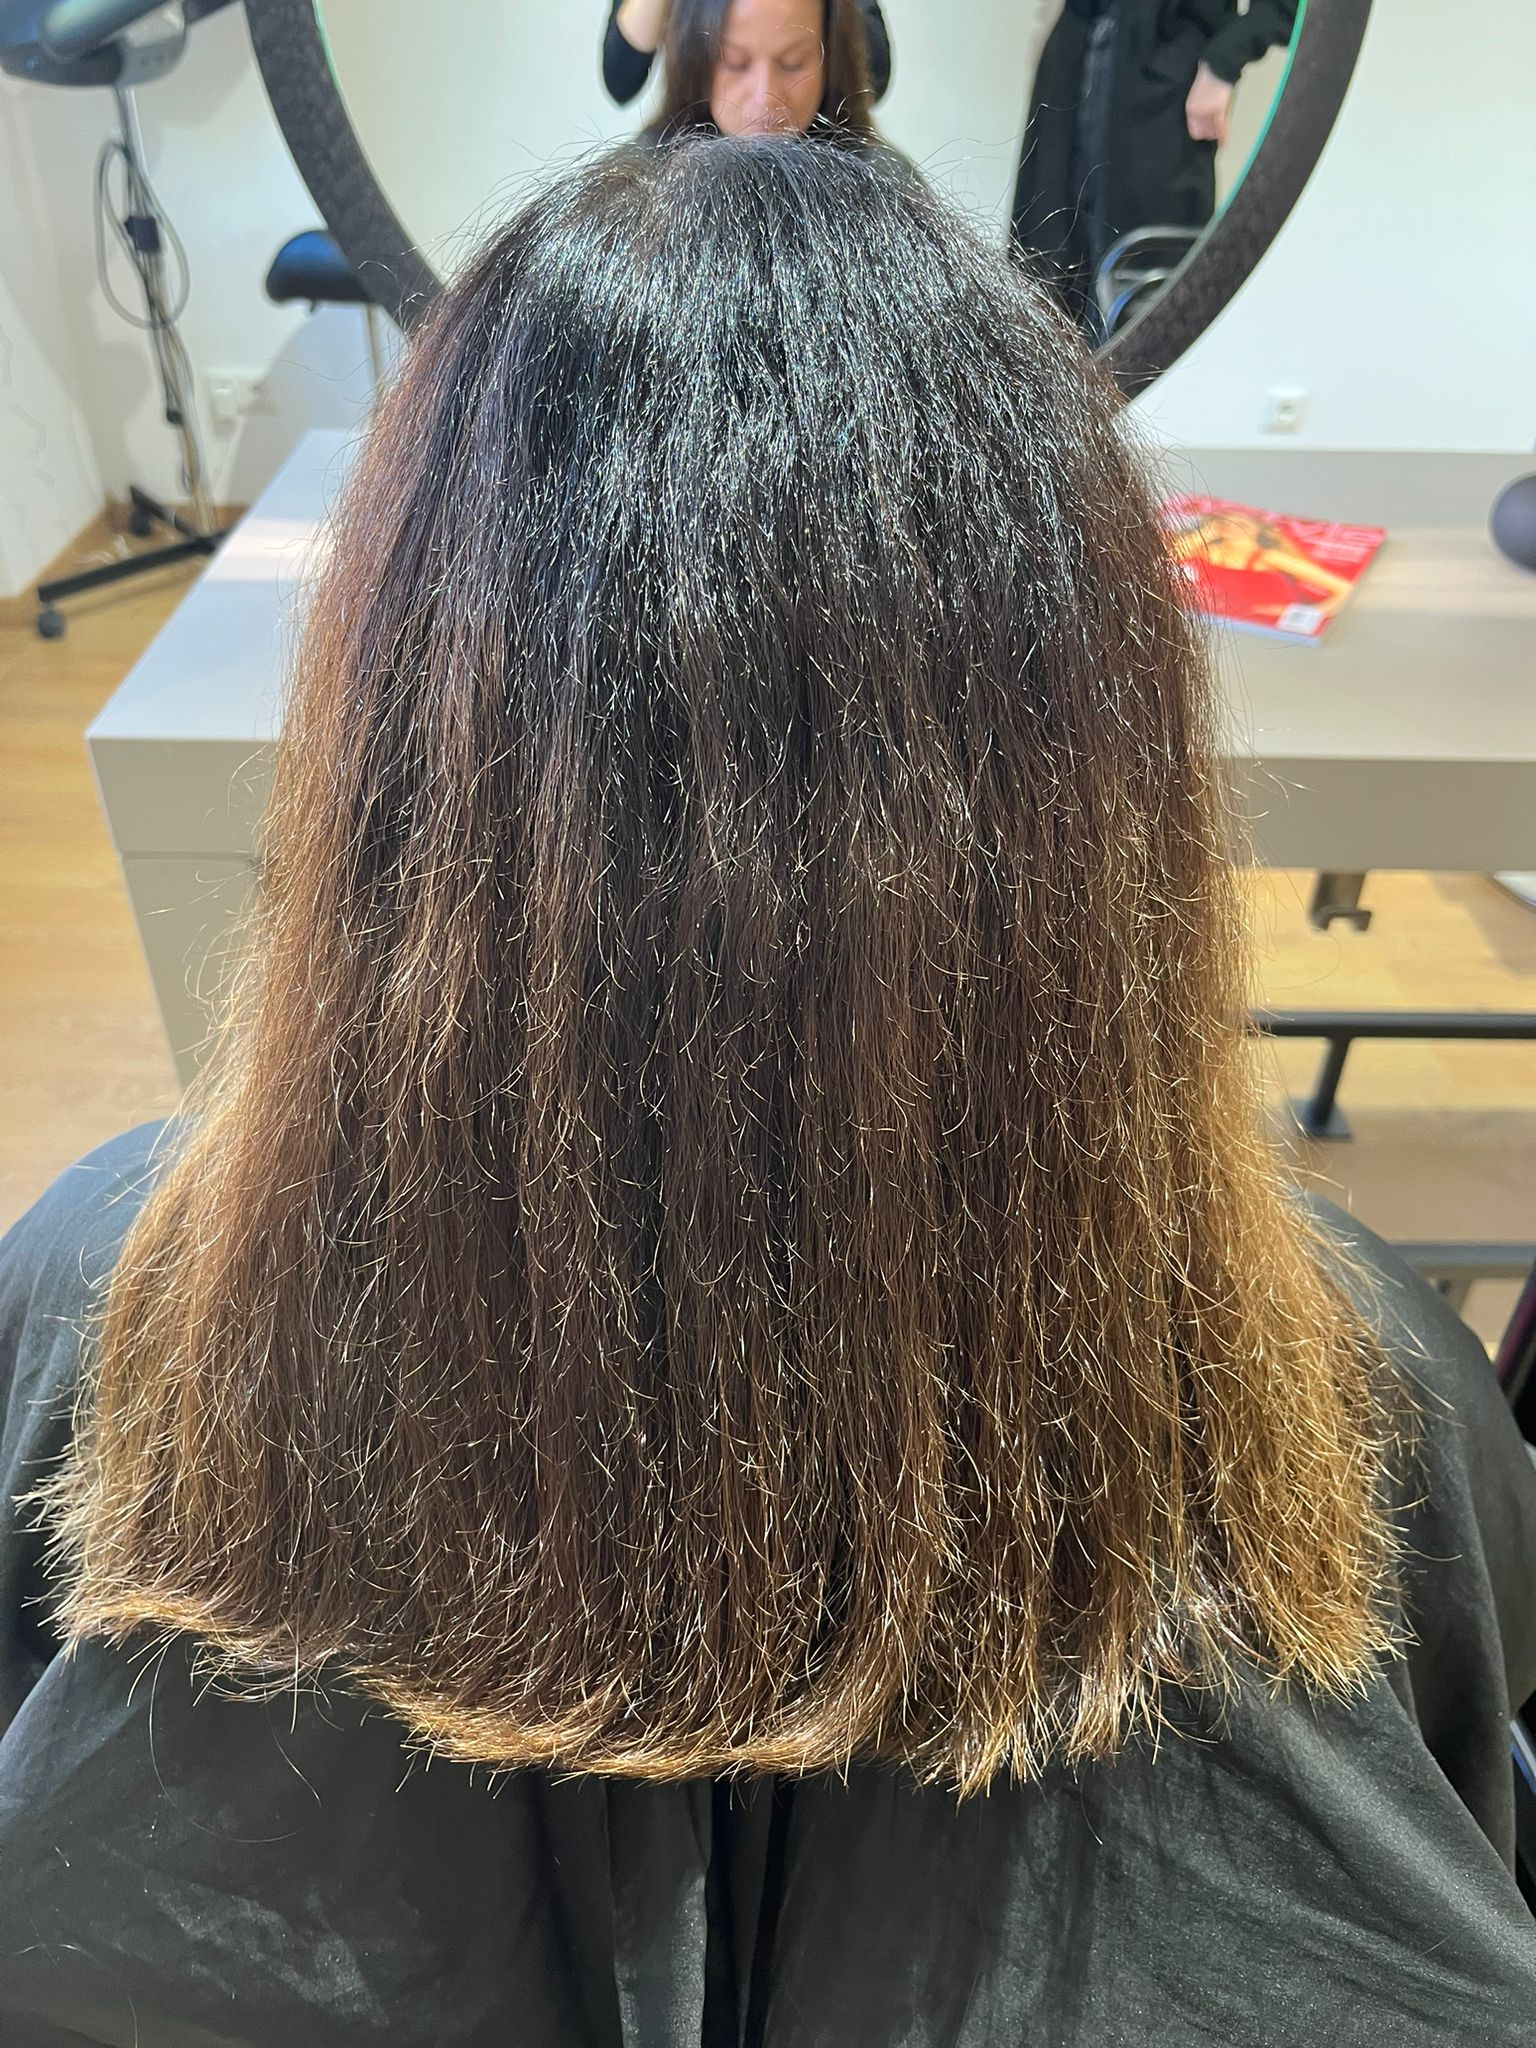 Haare vor der Behandlung mit Haarbotox